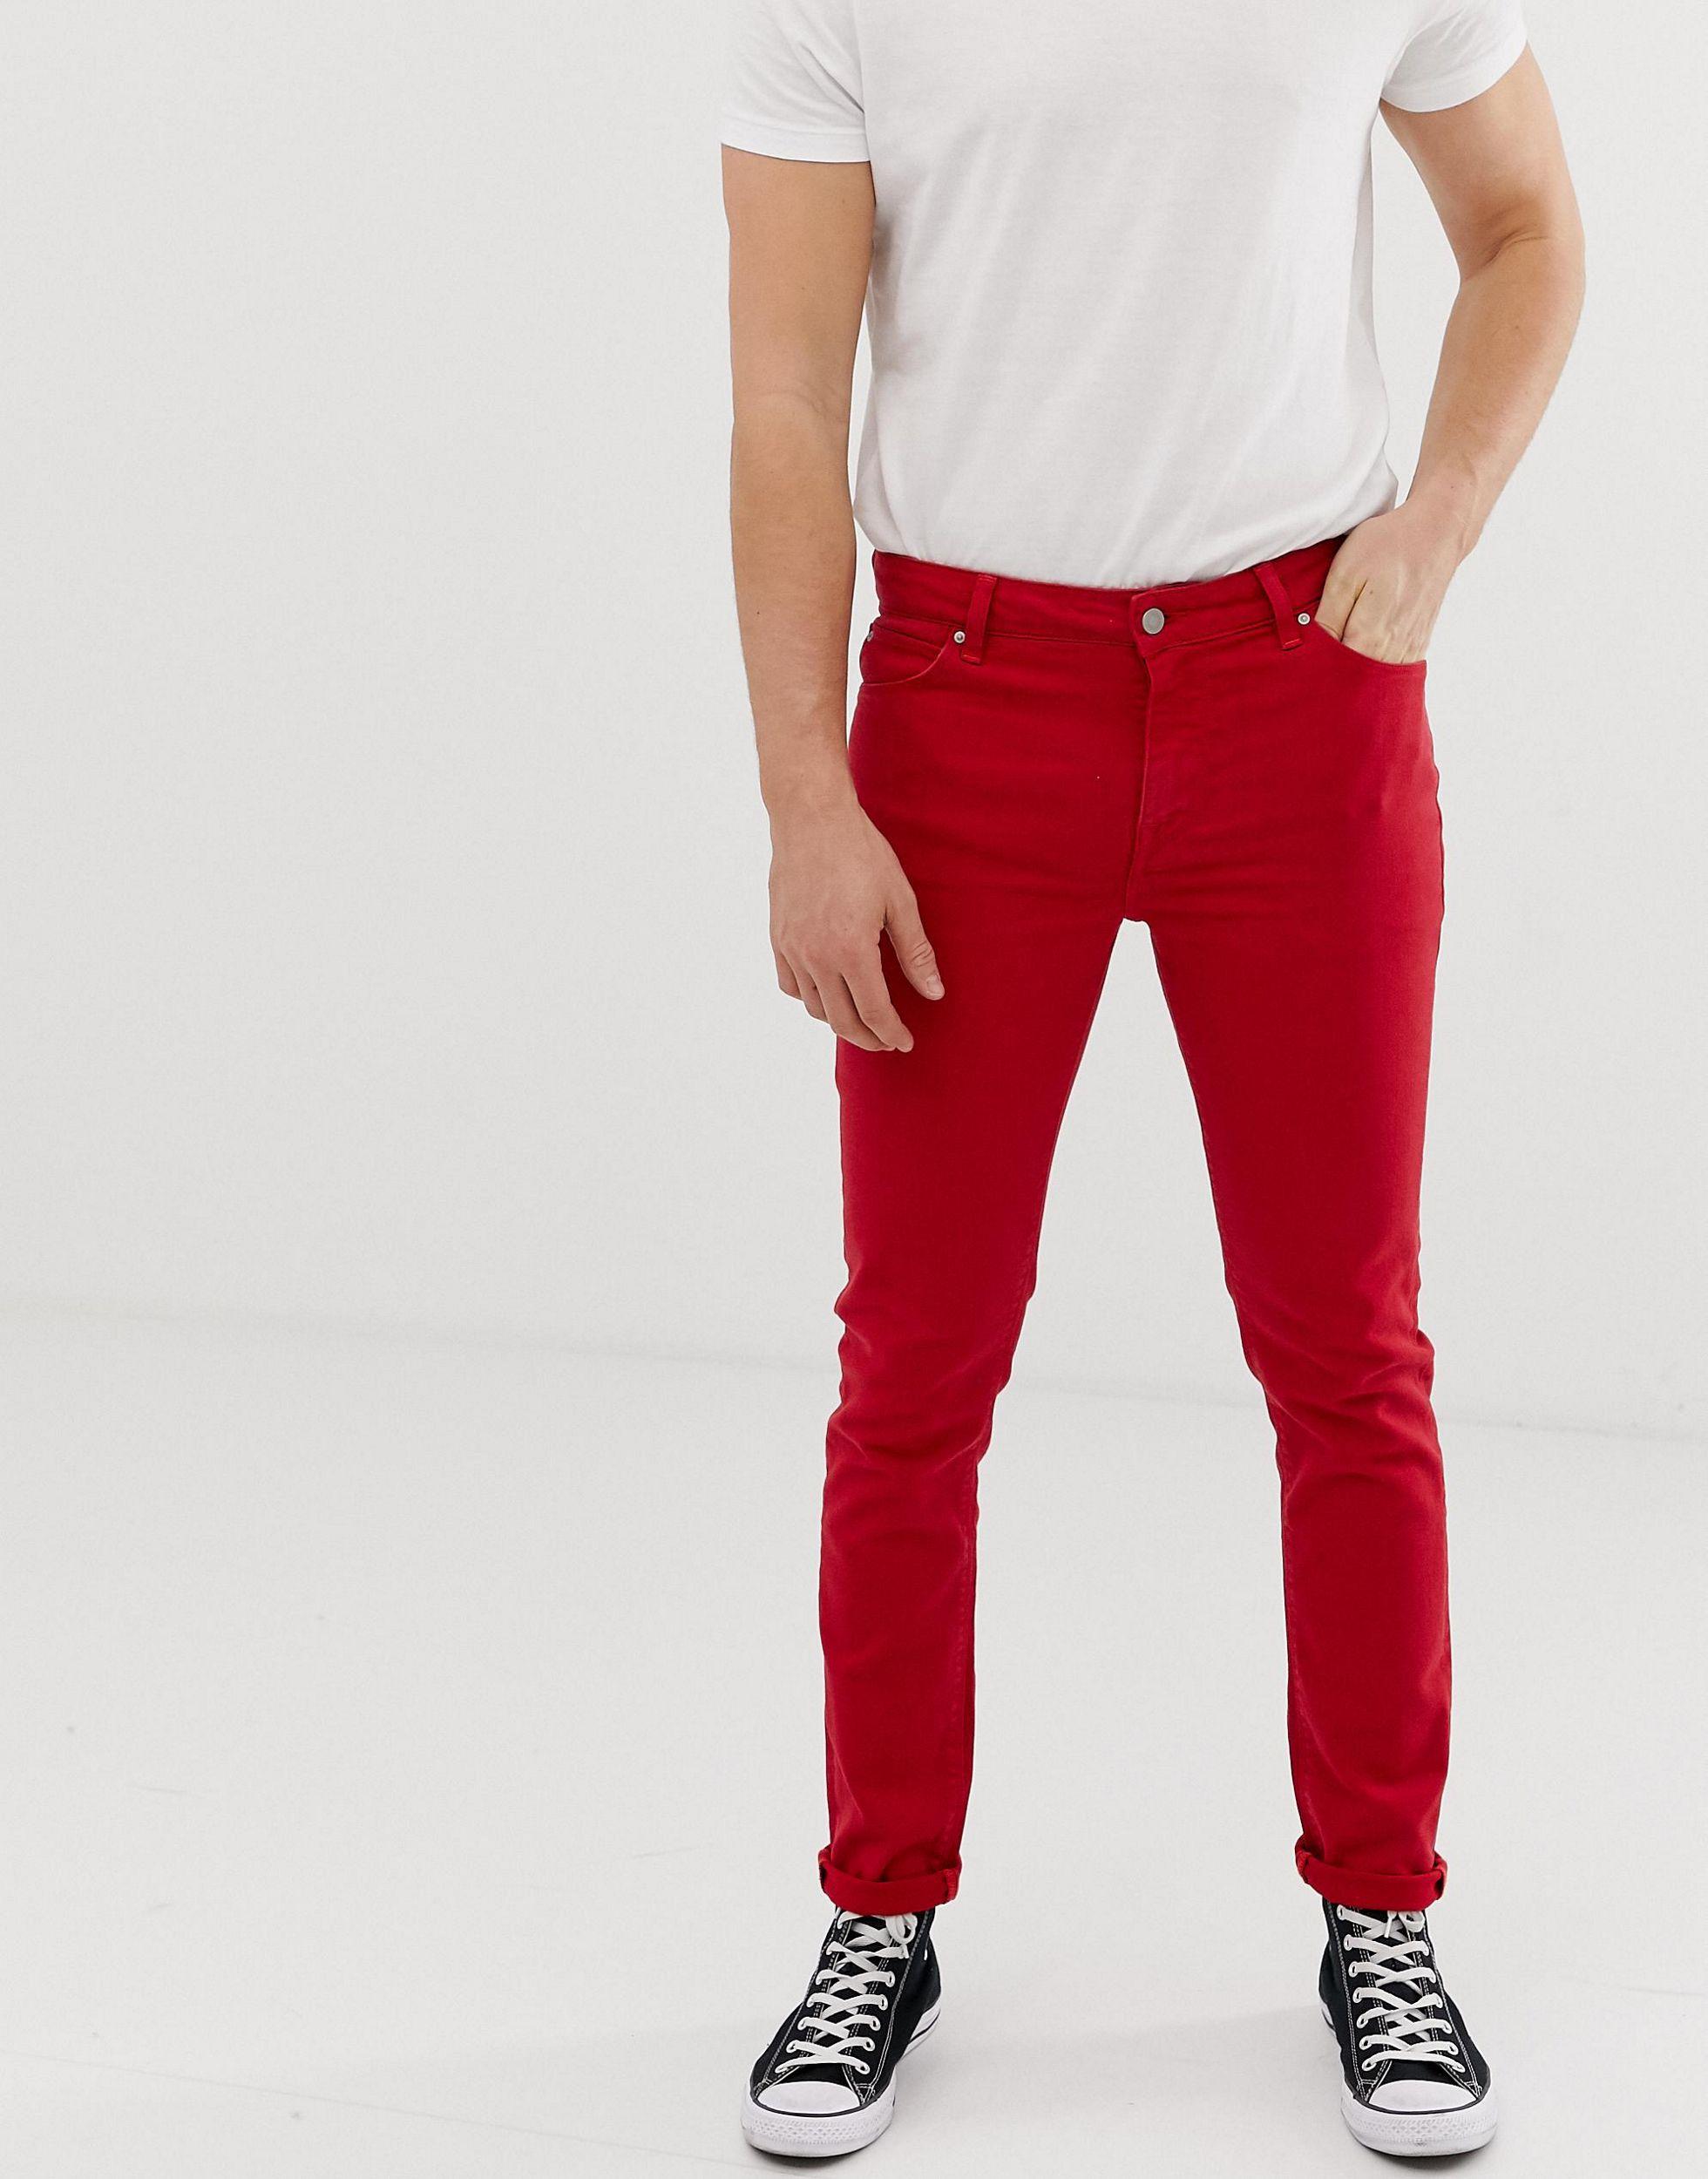 ASOS Denim Skinny Jeans In Red for Men - Lyst